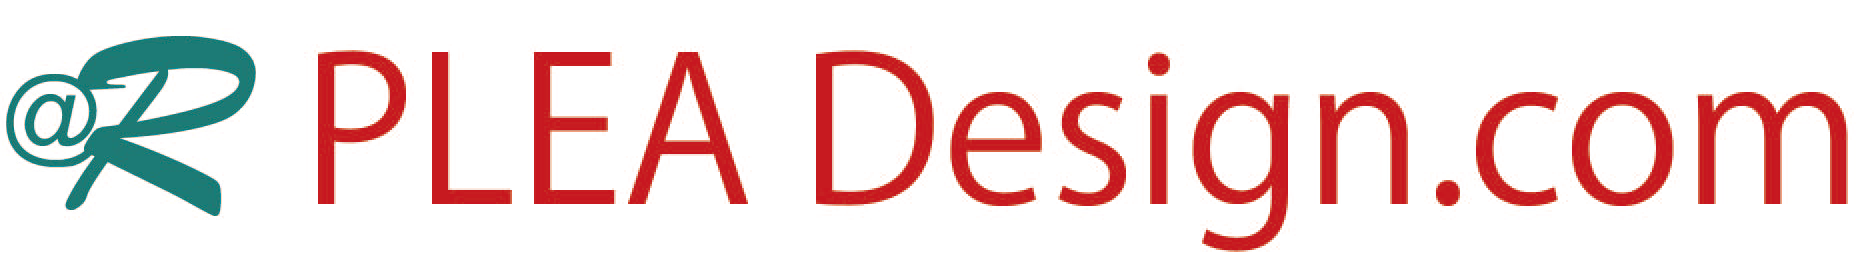 PLEA Design.com